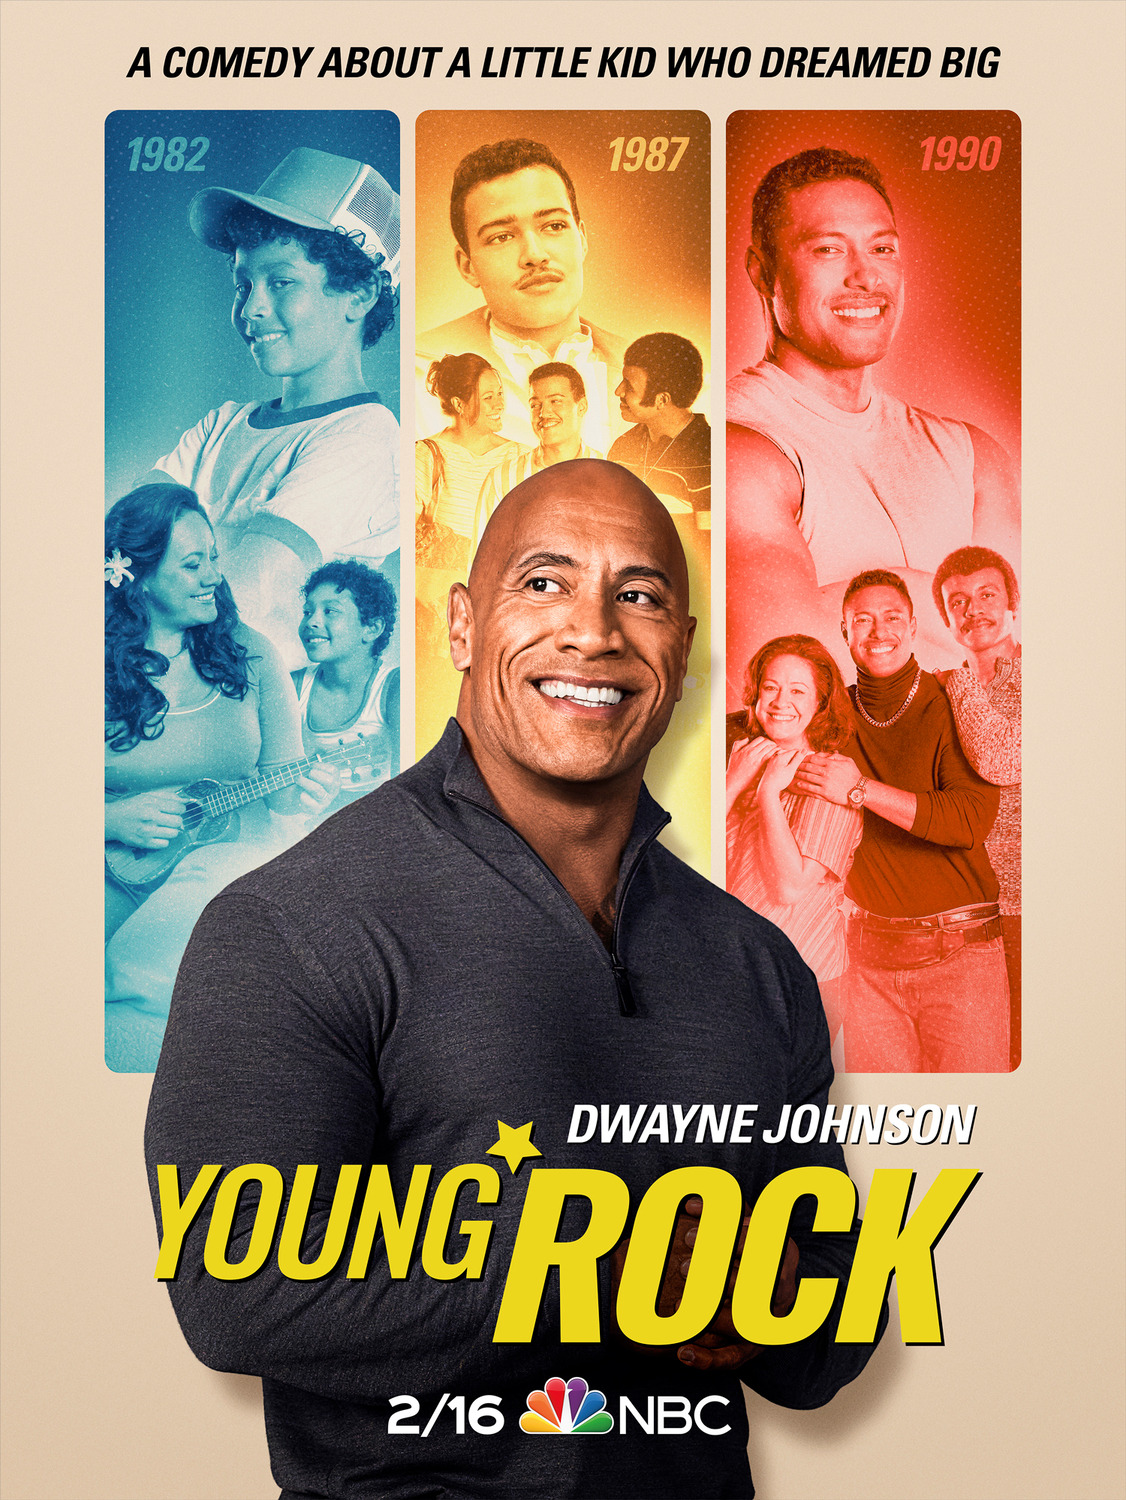 Young Rock Season 2